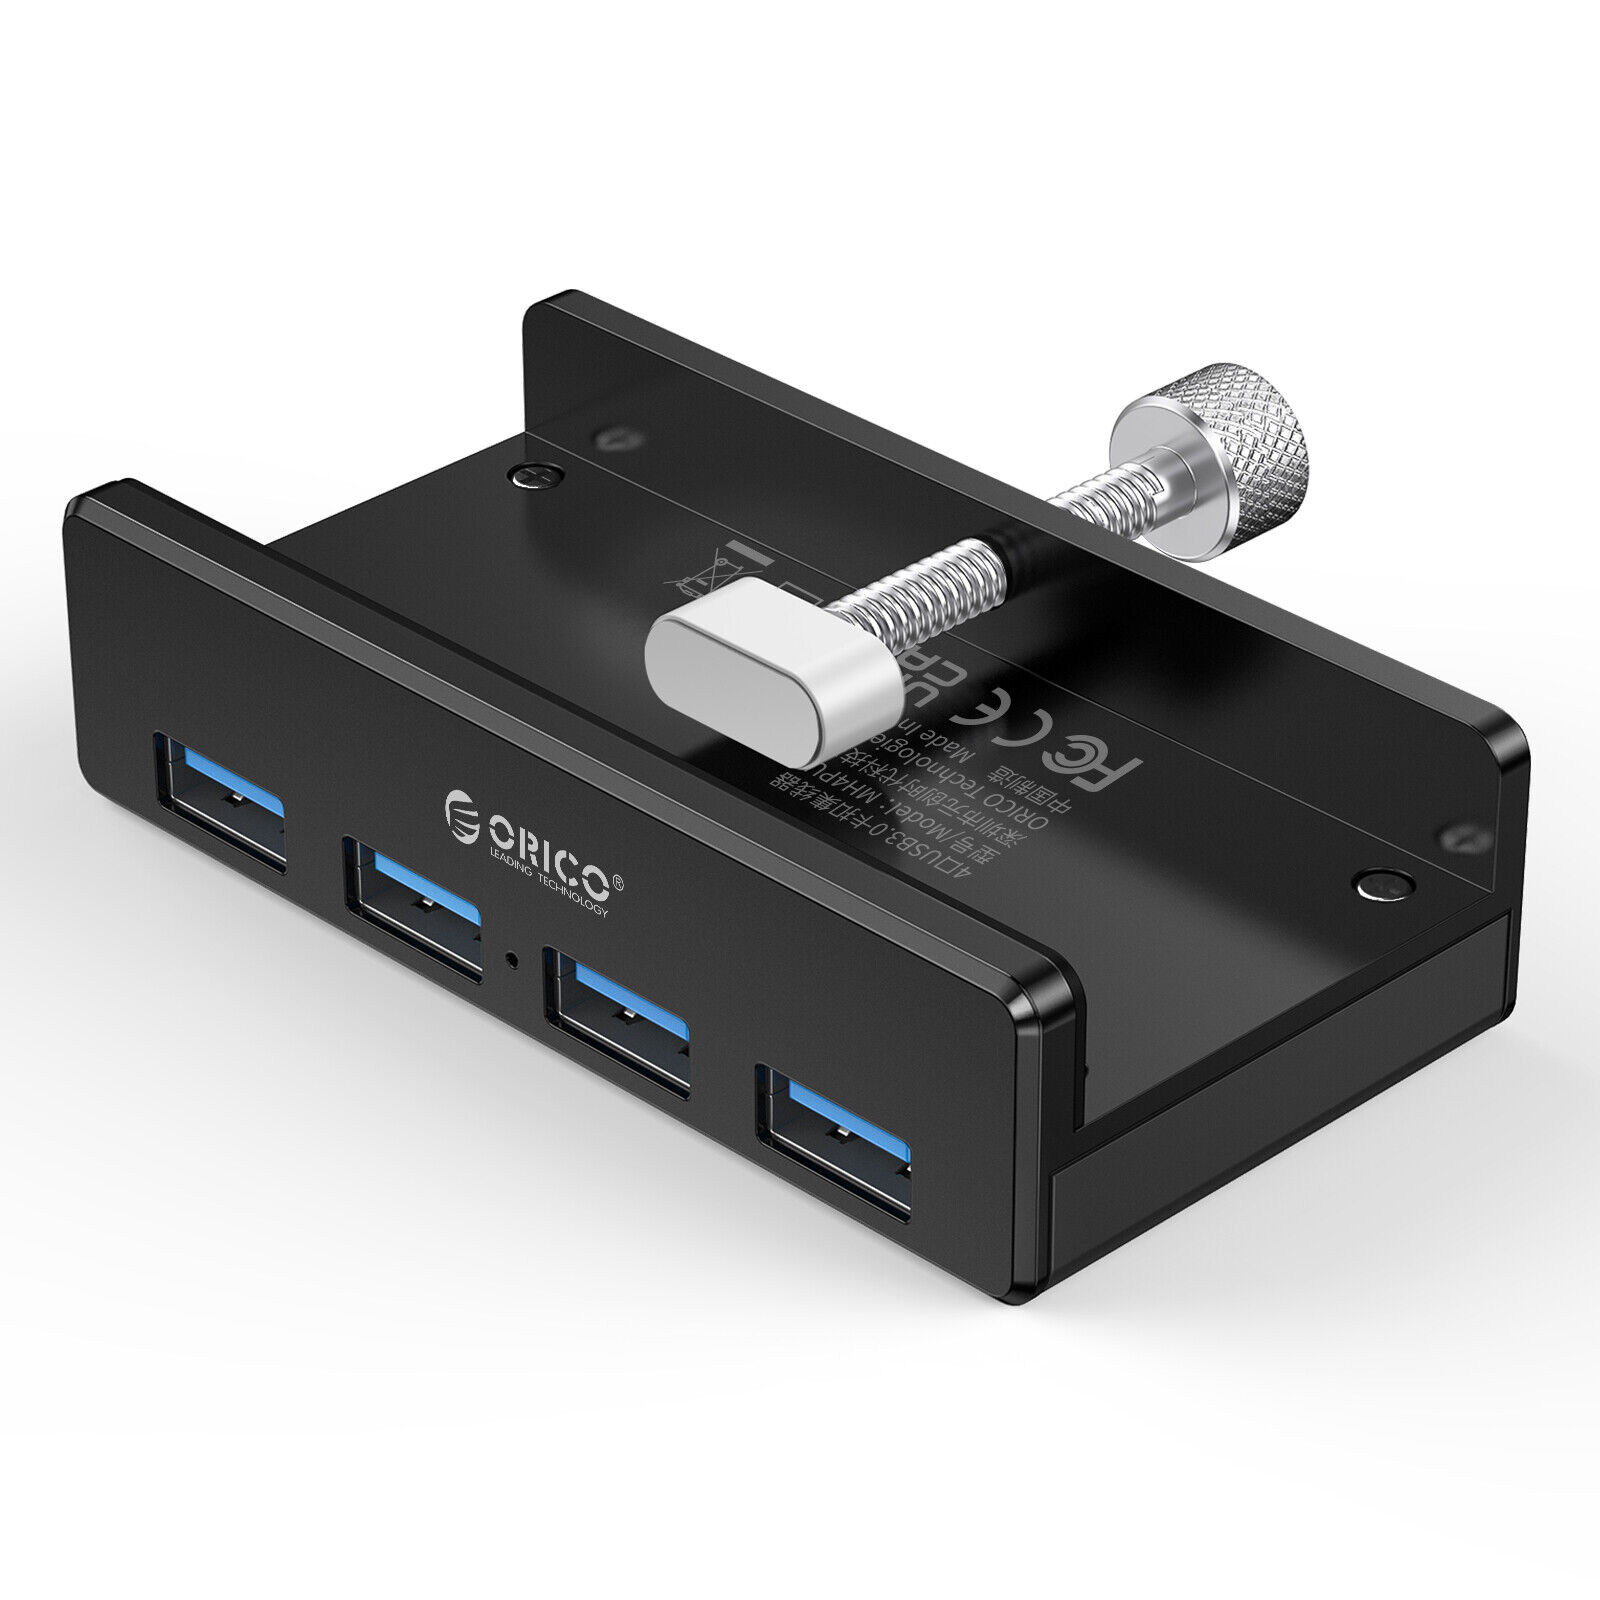 ORICO USB 3.0 Clamp Hub Aluminum 4-Port Hub 3.0 USB w/ Power Supply Port & Cable